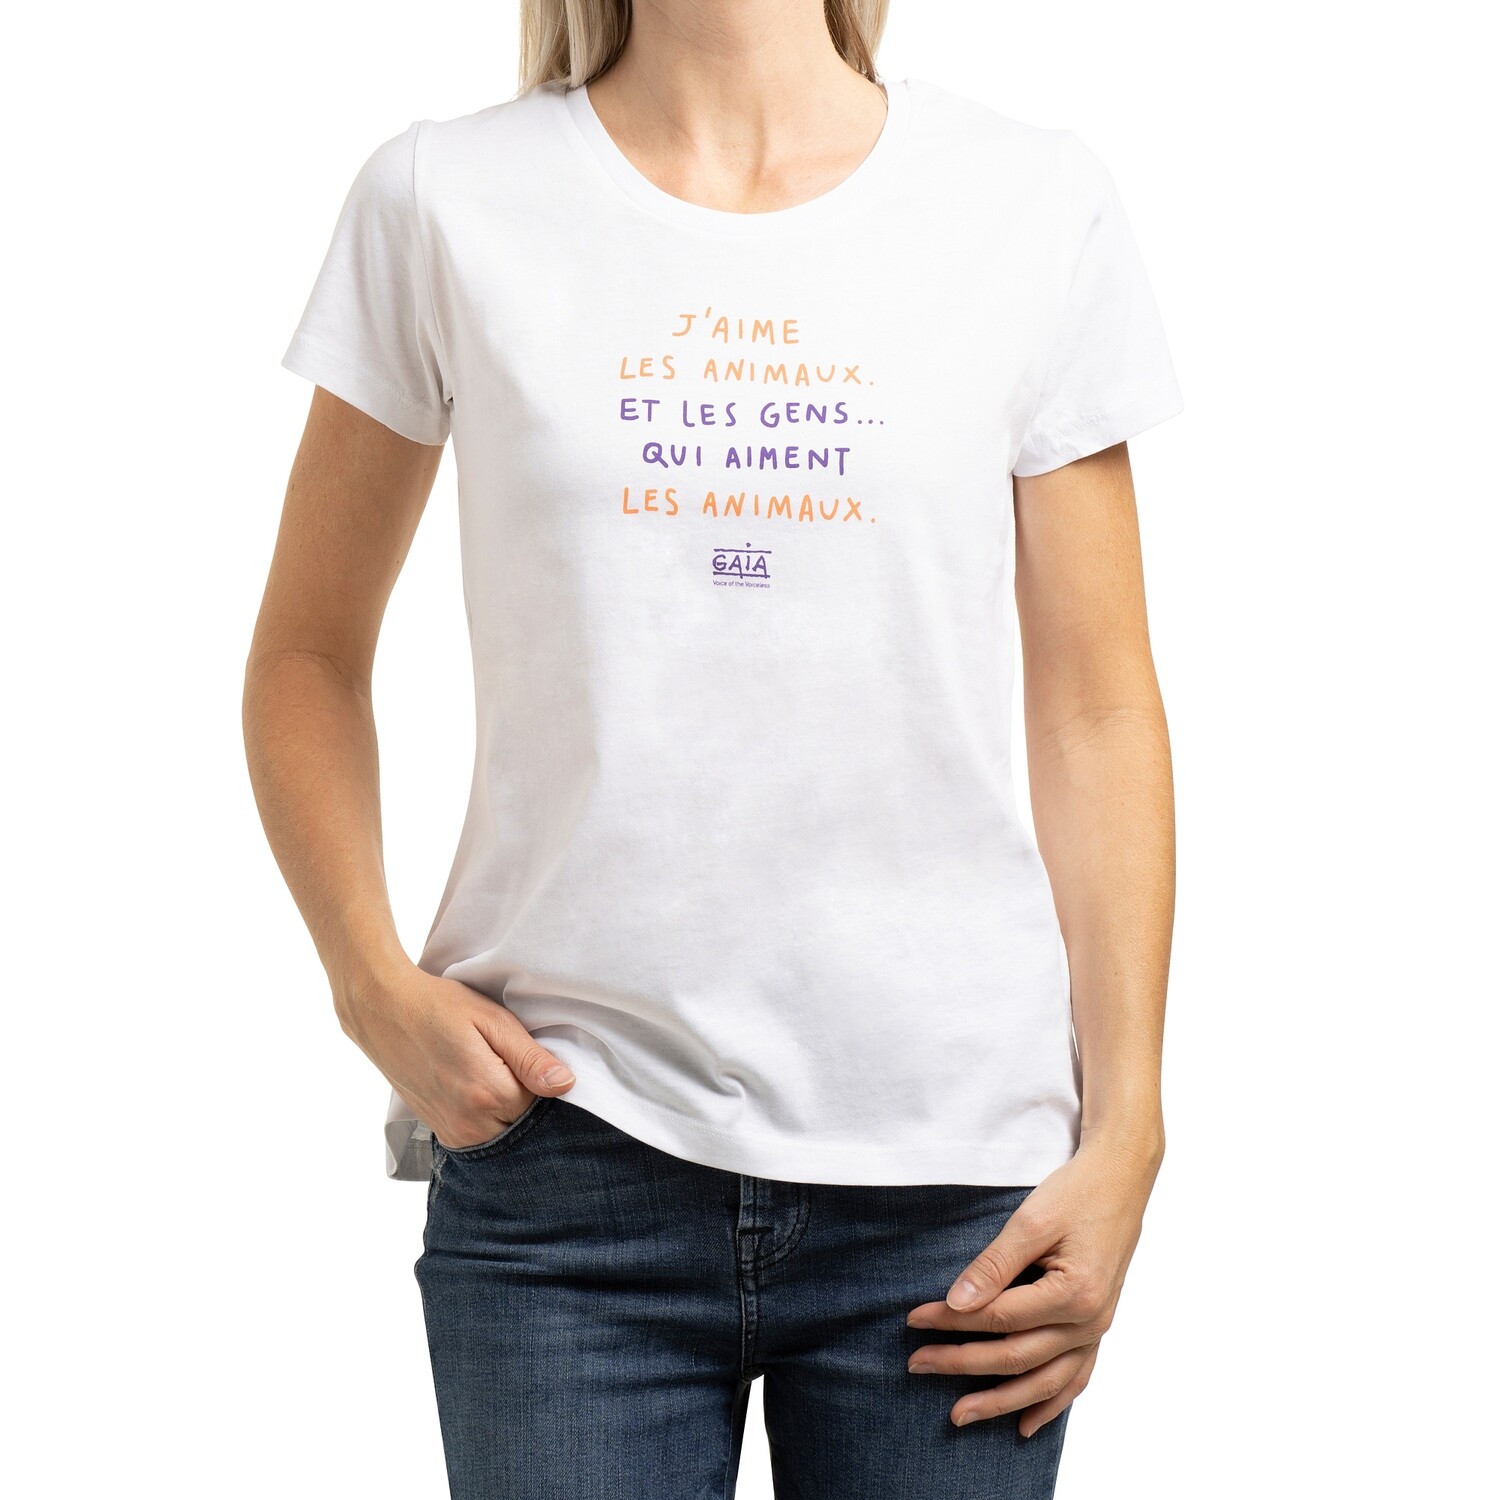 shirt 'J'aime les animaux' (women)